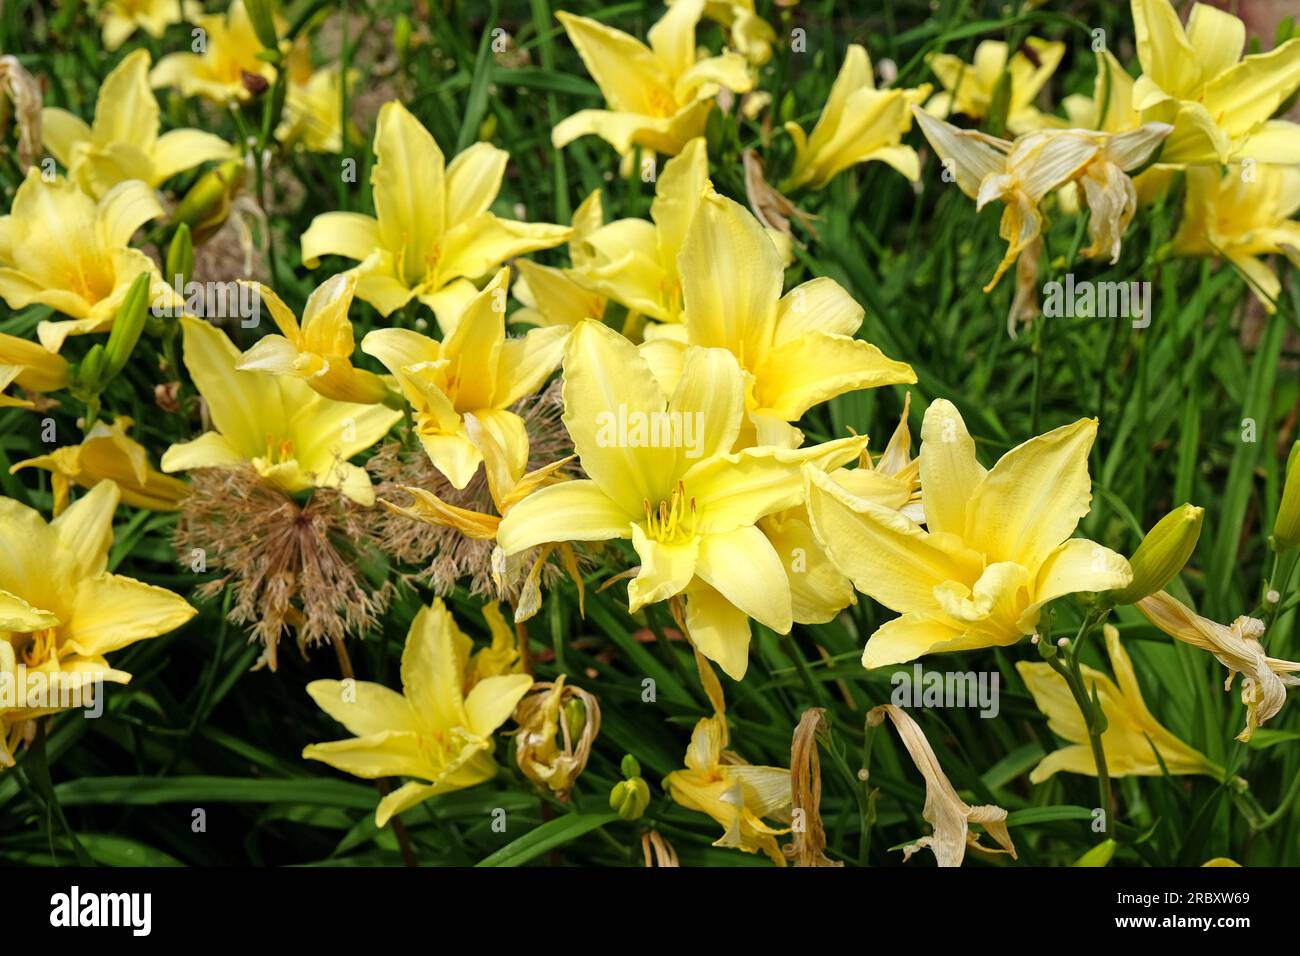 Hemerocallis hybrid daylily ÔSunshine YellowÕ in flower. Stock Photo